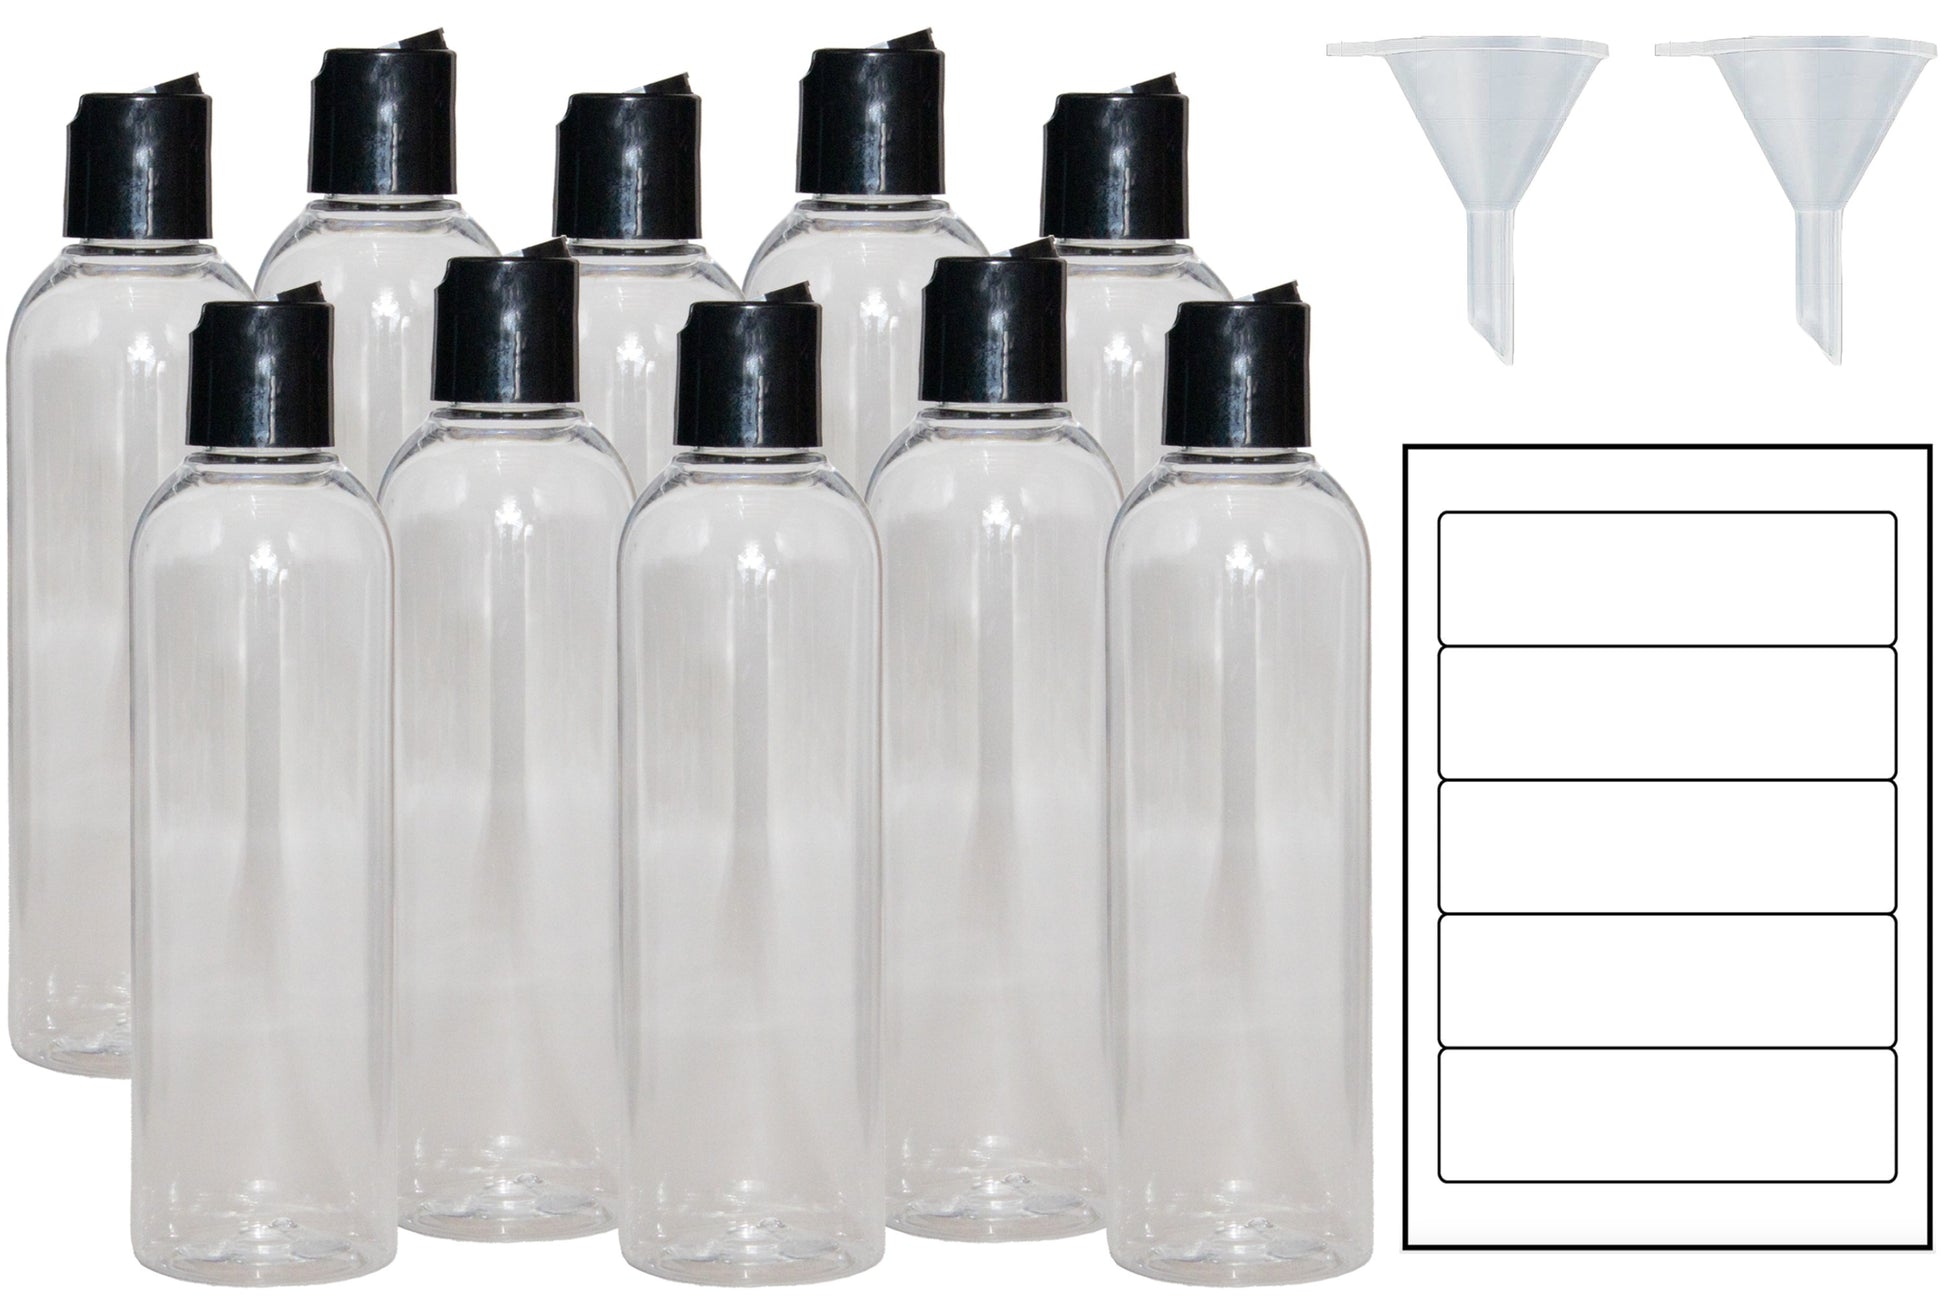 8 Oz Black Plastic Bottles Set of 3 Cosmo Empty Squeeze Bottles